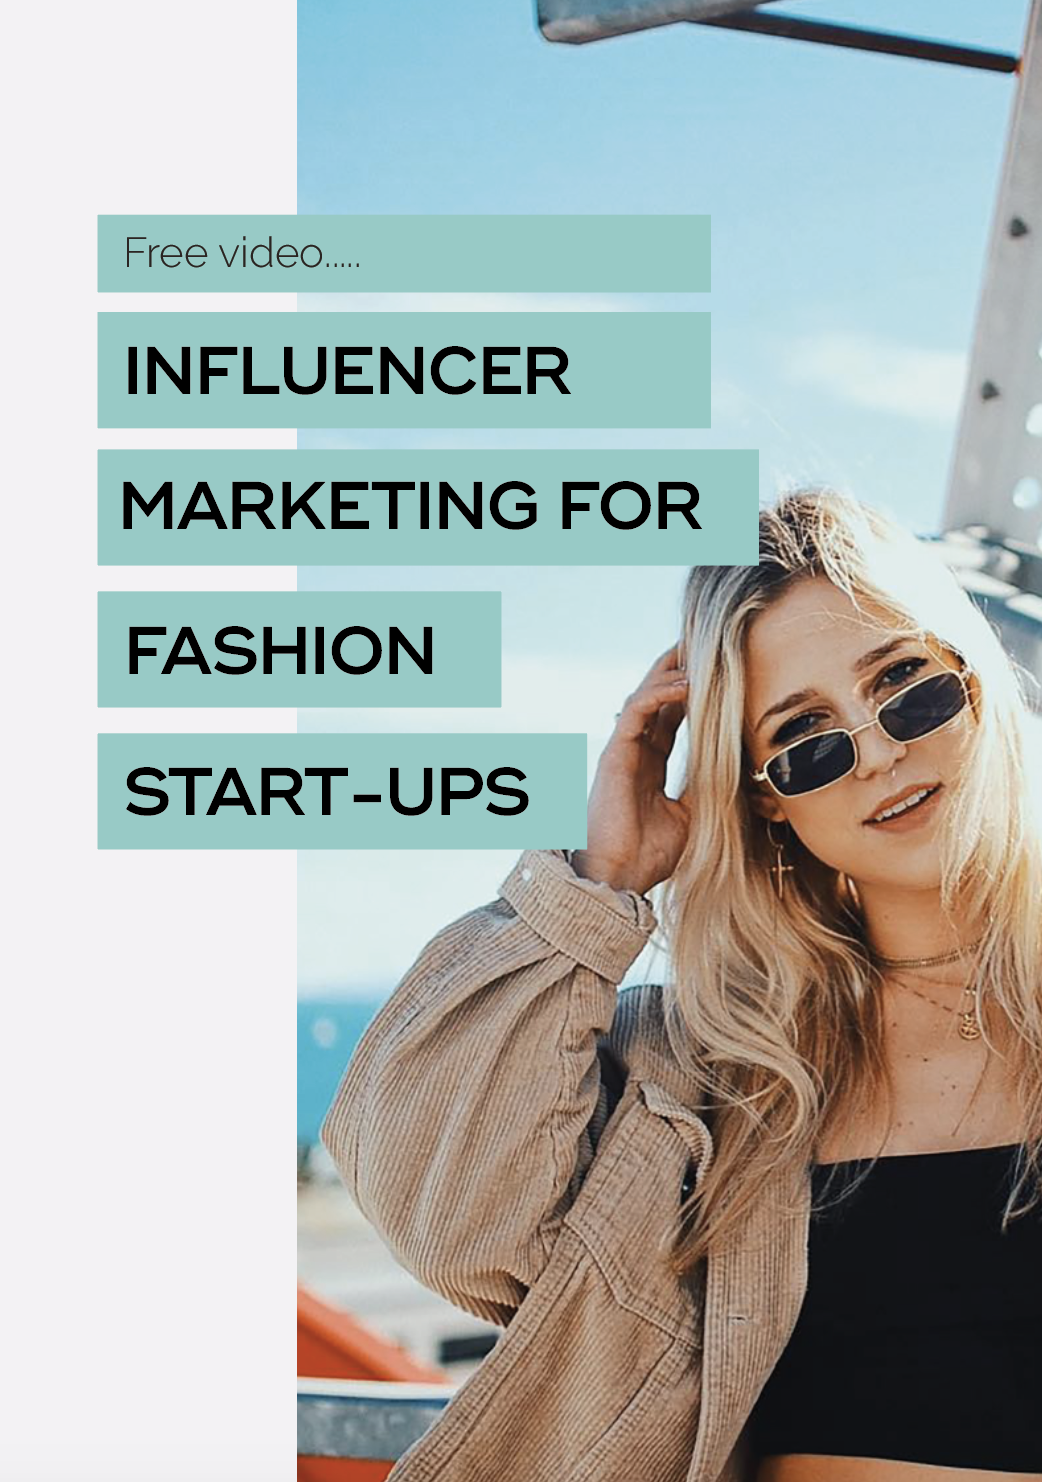 Influencer Marketing for Fashion Start-Ups 4.png